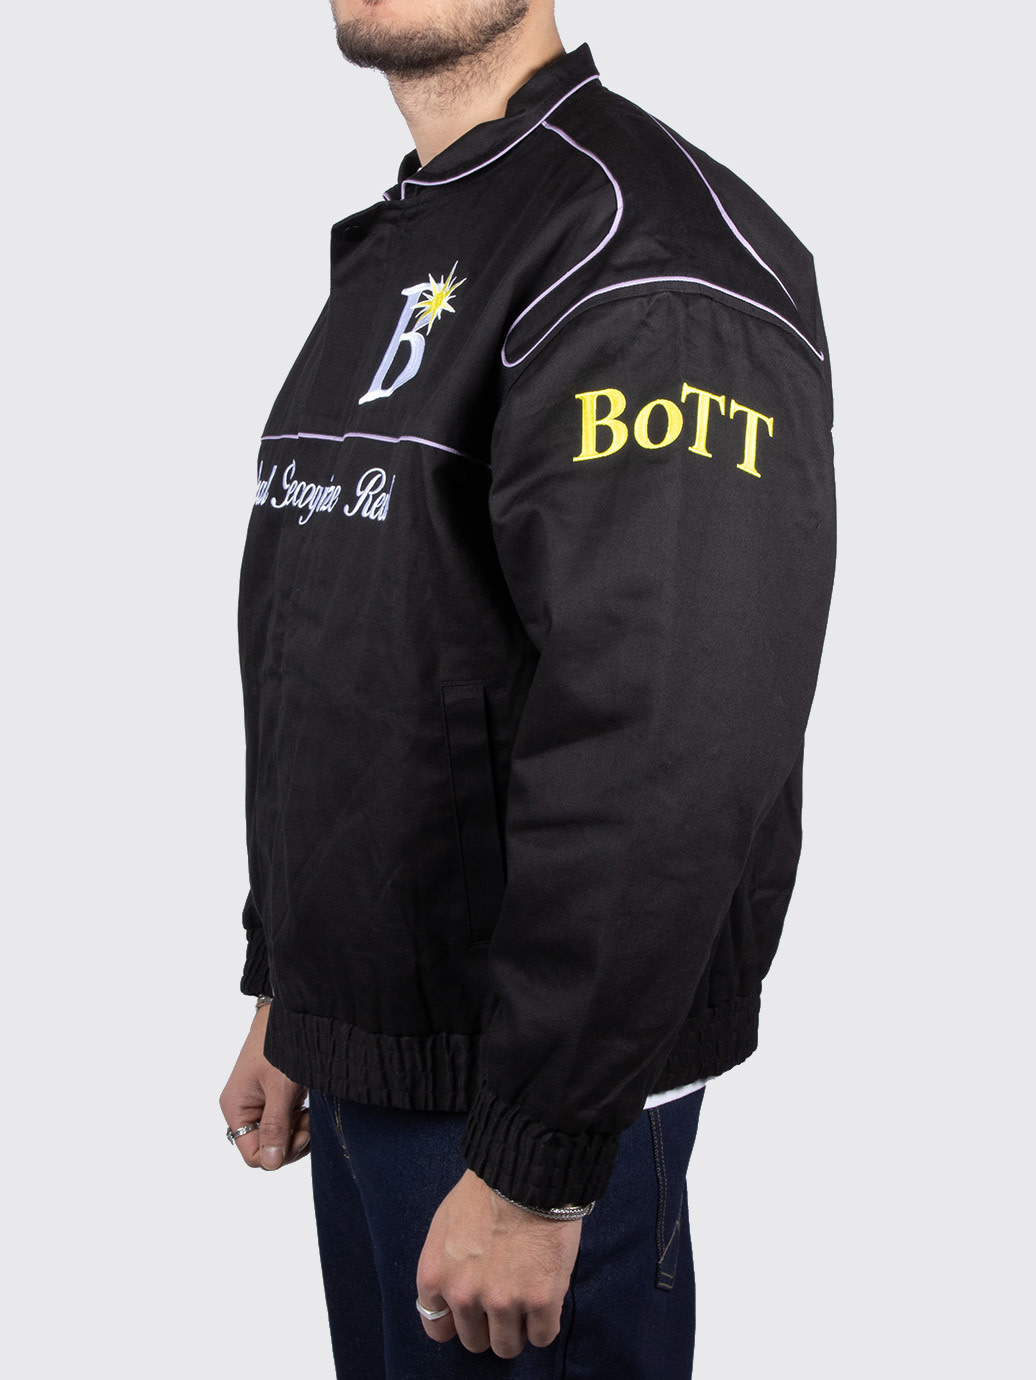 Bott Cotton Racing Jacket 希少Mサイズ-